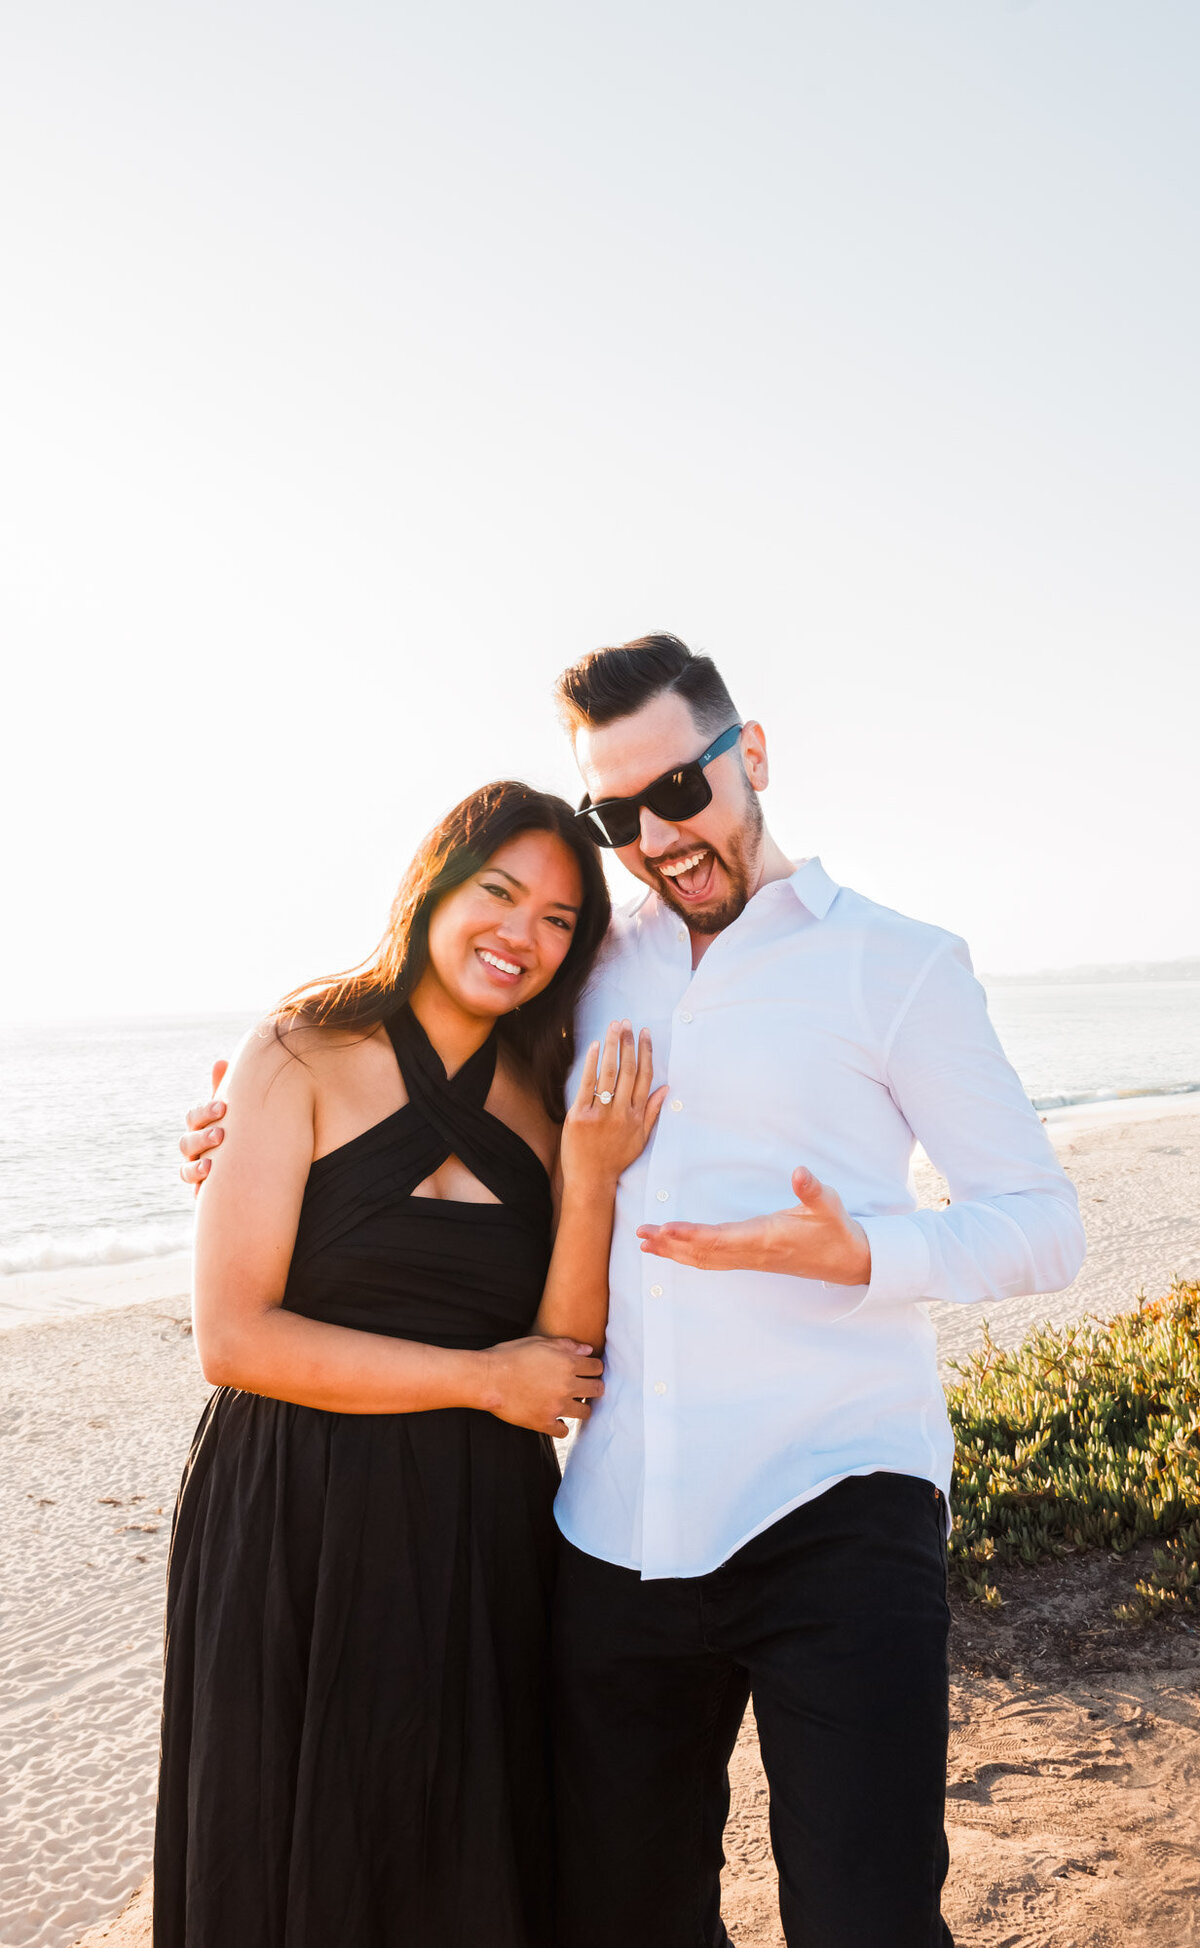 Kyle Woolum + Stephanie-Proposal Engagement-Half Moon Bay-Dunes Beach-San Francisco Wedding Photographer-San Francisco Photographer-Half Moon Bay Photographer-Emily Pillon Photography-S-092323-22